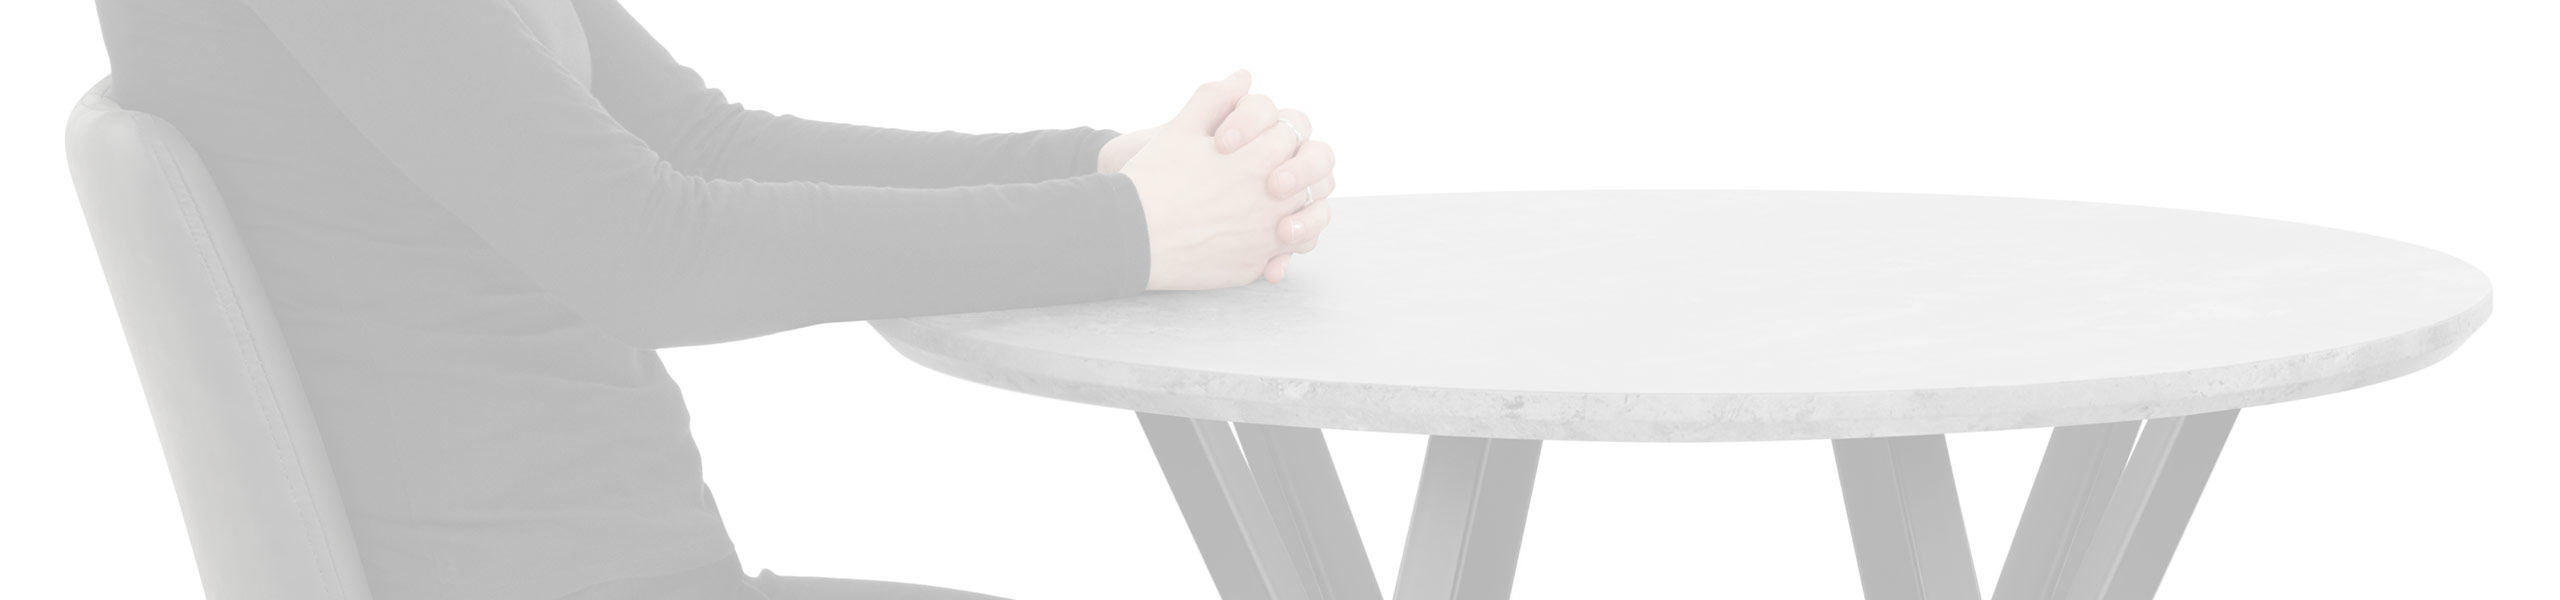 Quest 80cm Dining Table Concrete Review Banner